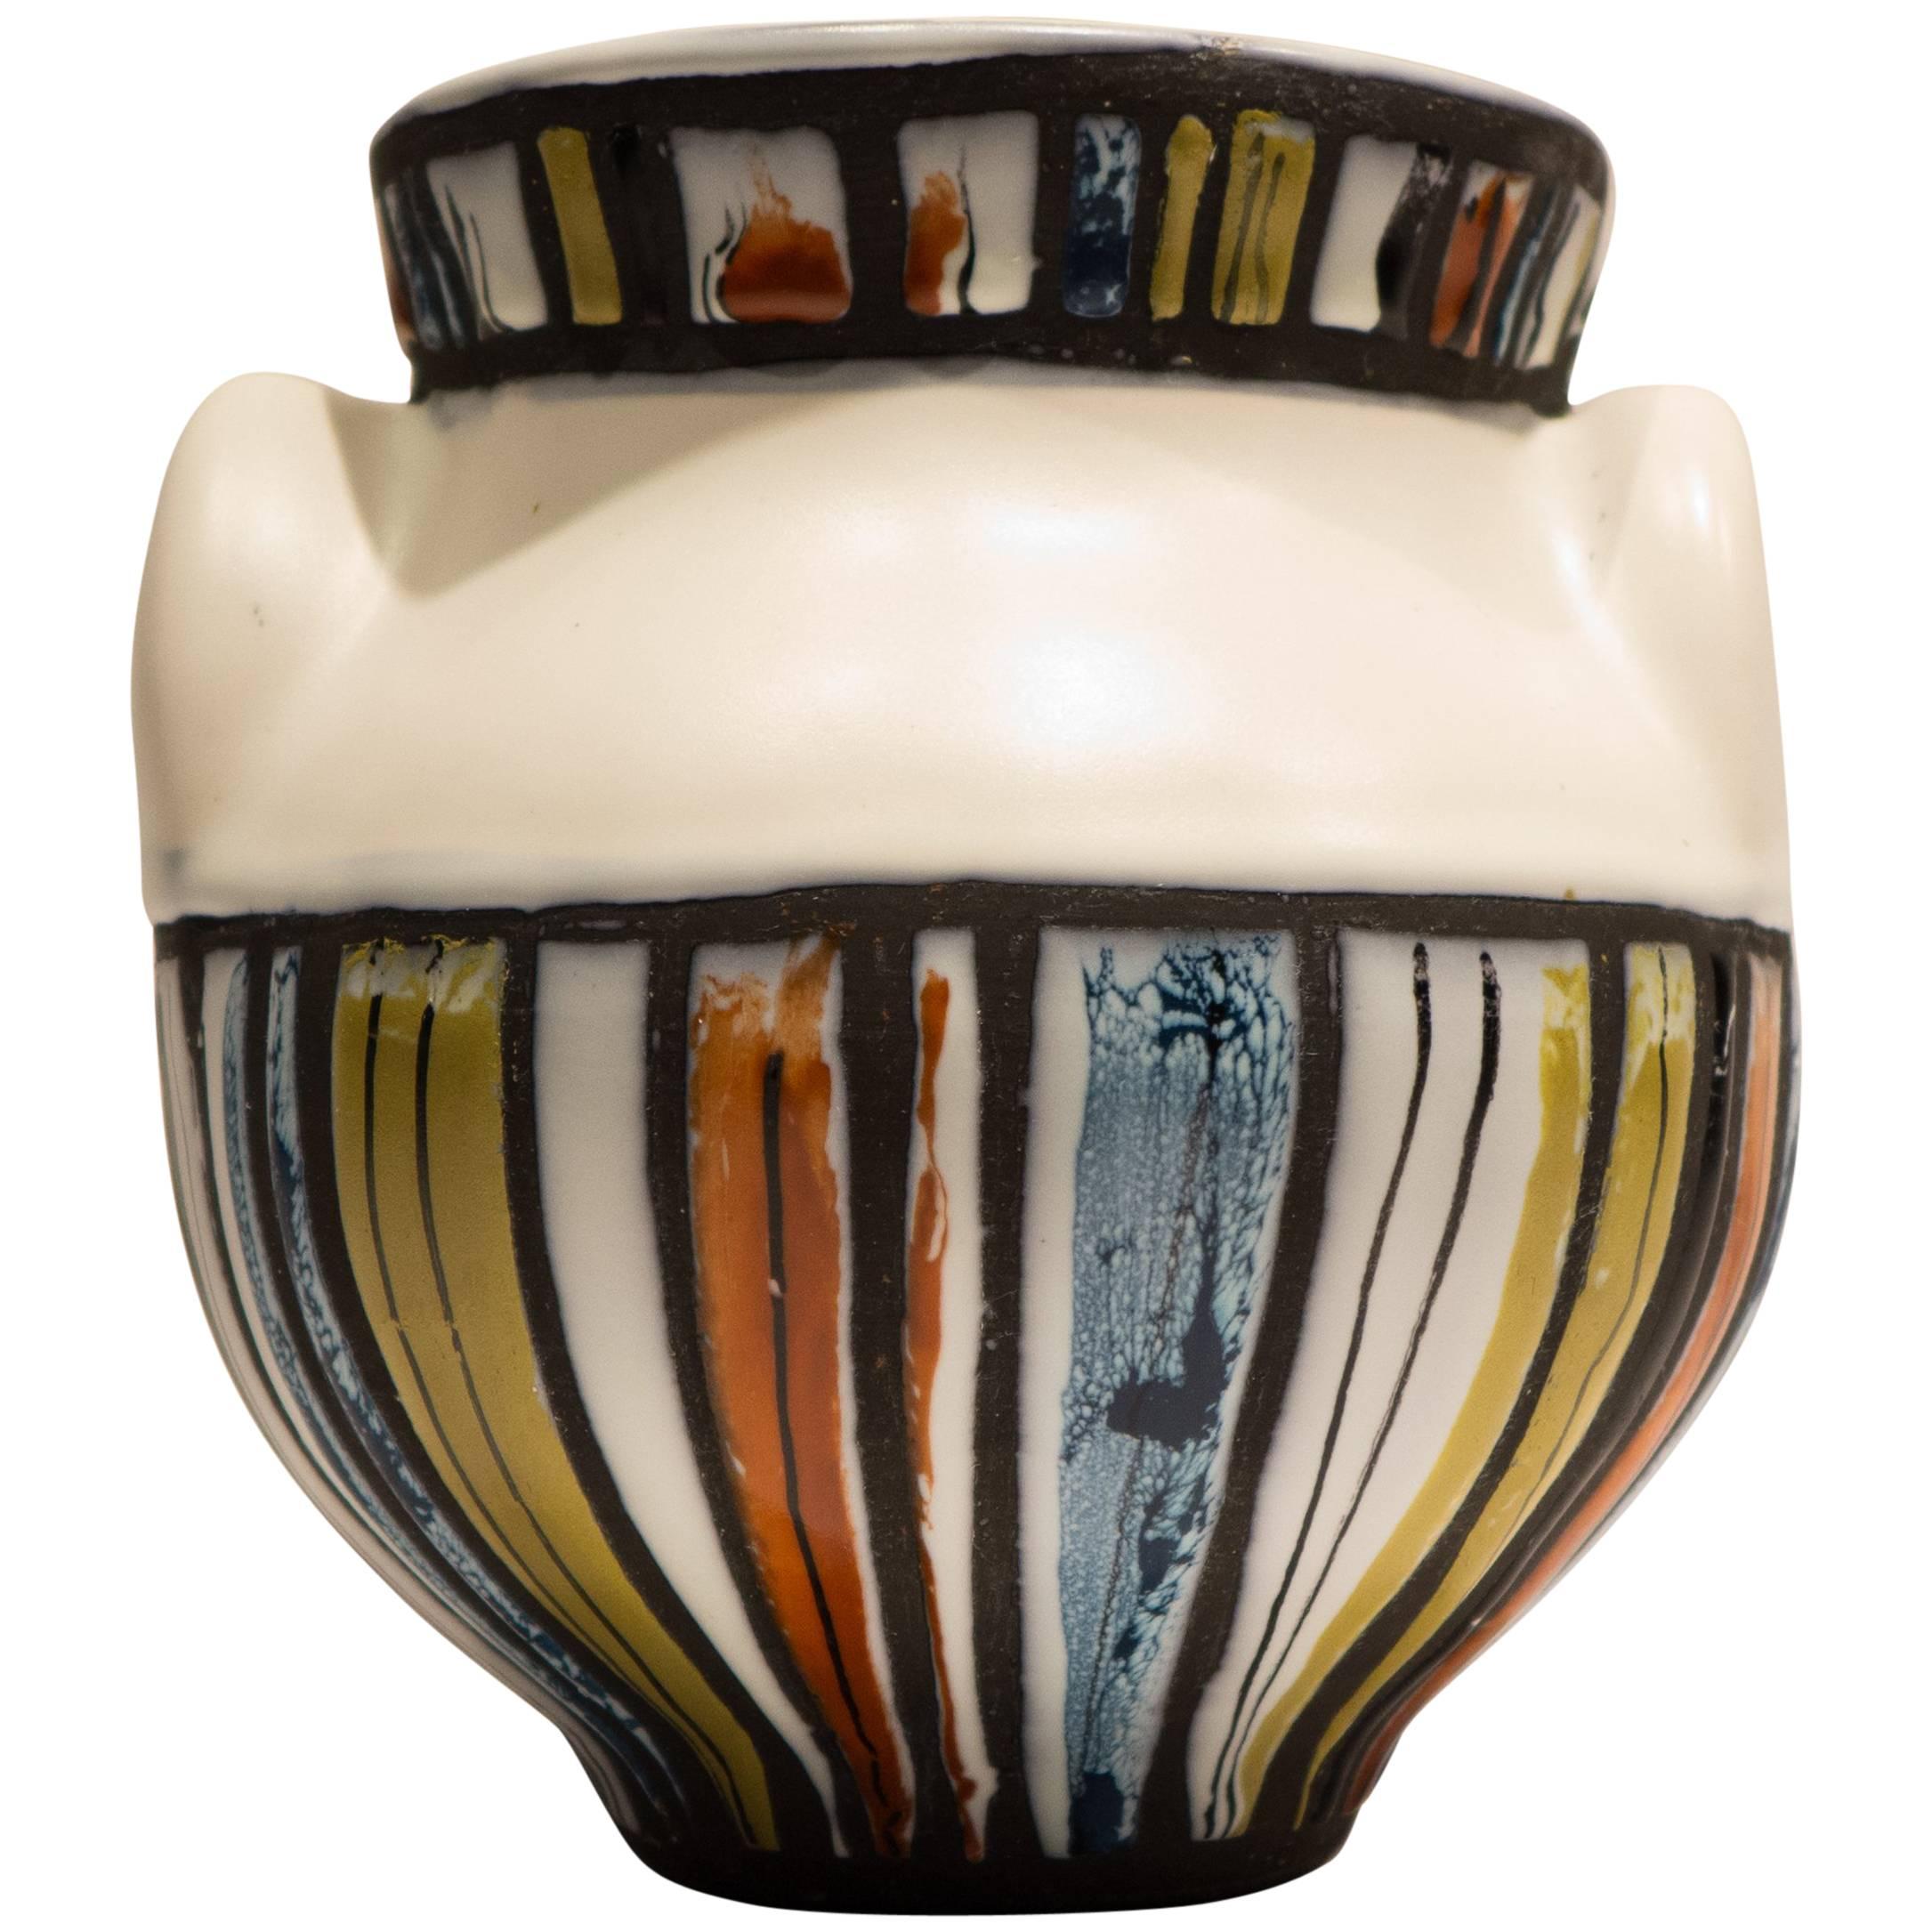 Roger Capron "Oreilles" Vase with Polychrome Decoration